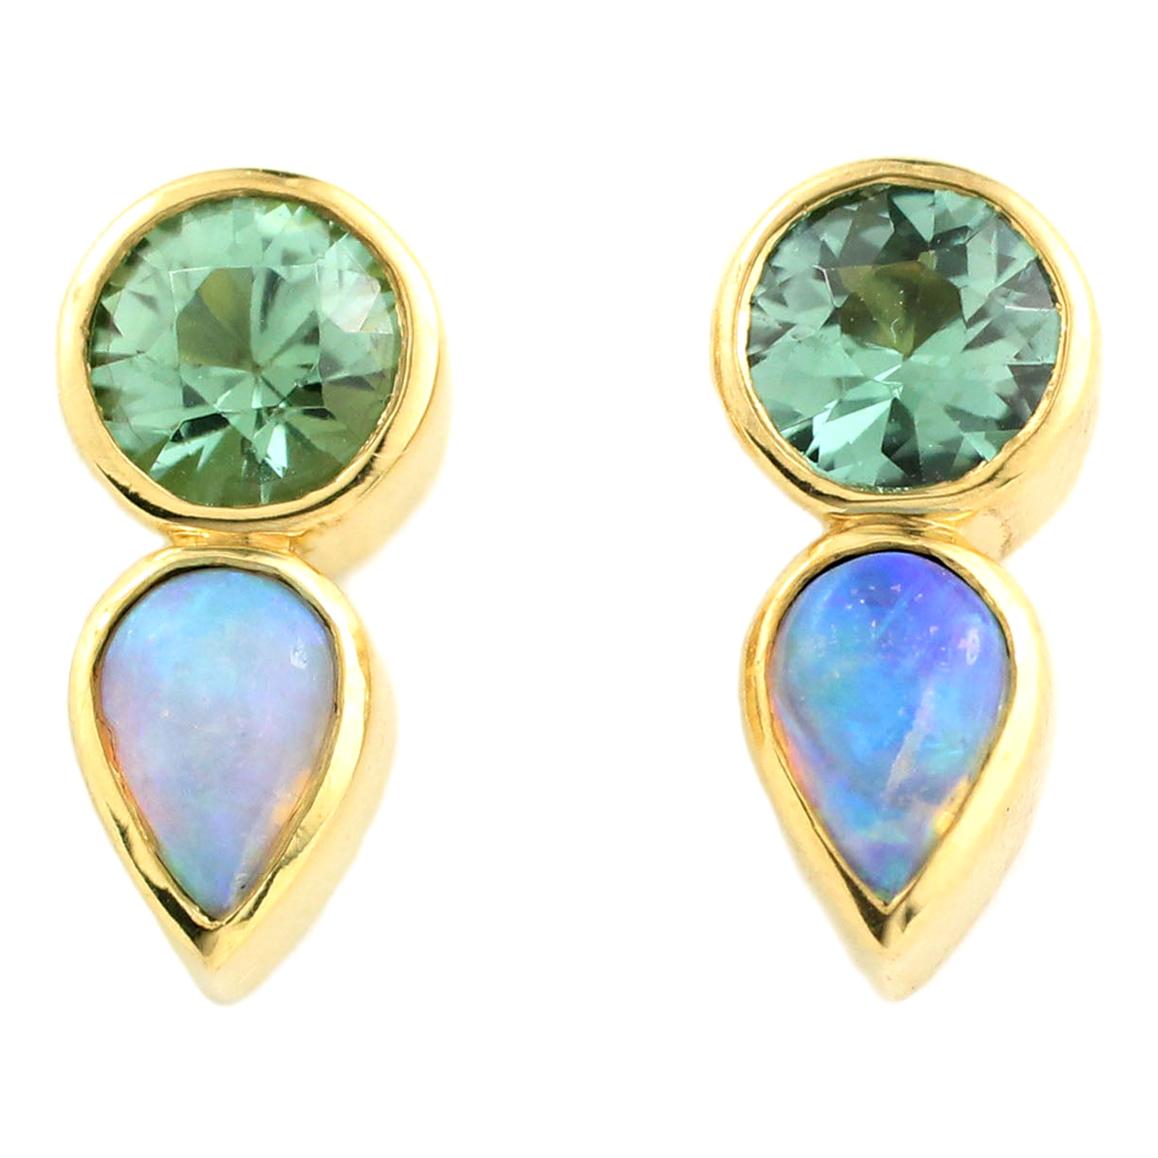 Julius Cohen Mint Tourmaline and Opal Earrings